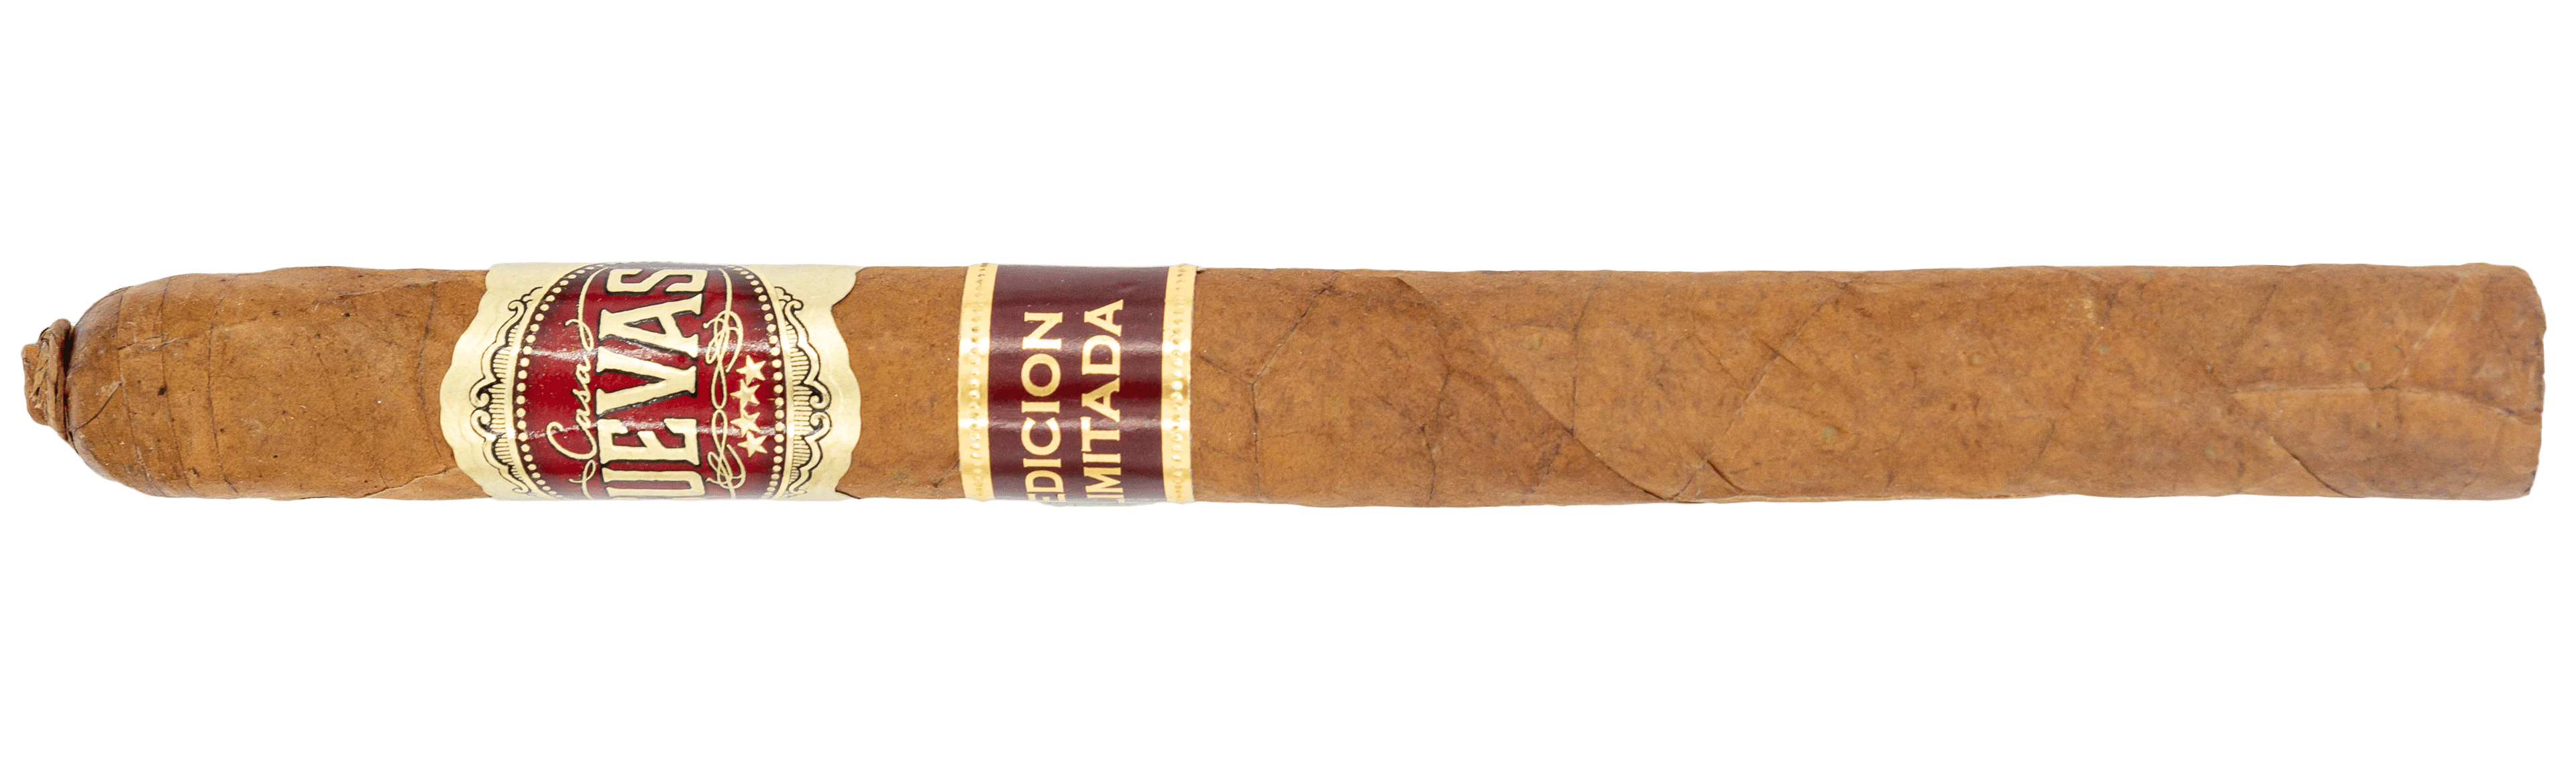 Hiland's Cigars 3 Finger Carbon Fiber Cigars Case - Hiland's Cigars